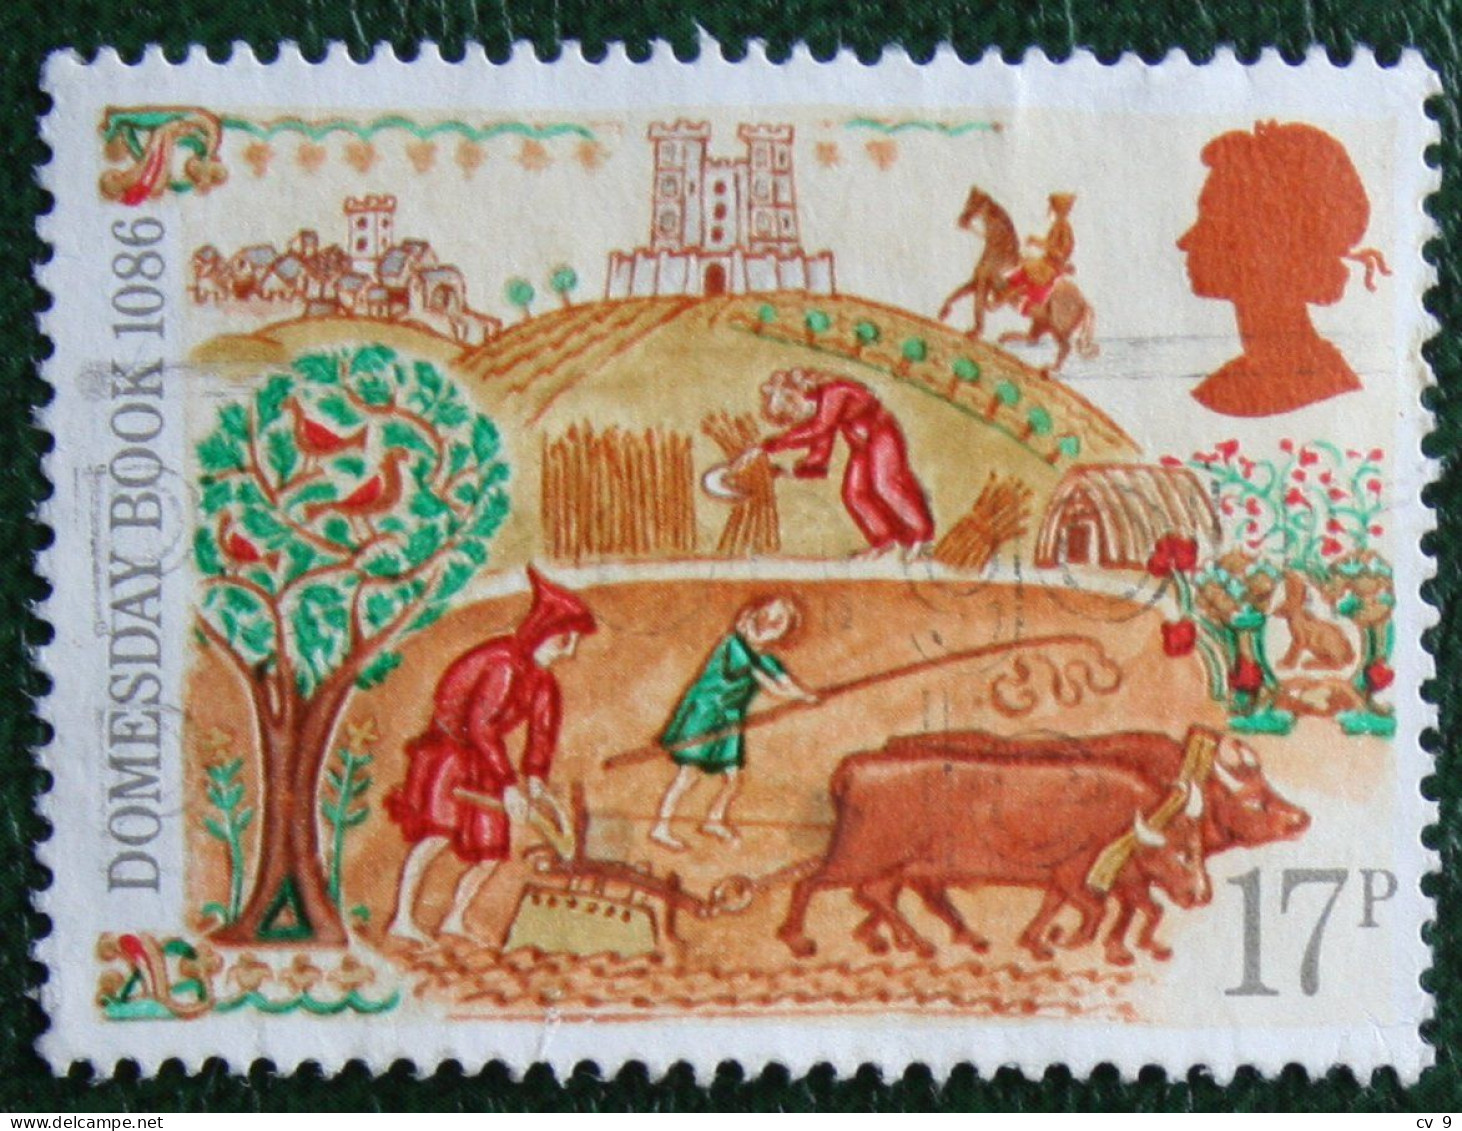 17P Domesday Book (Mi 1072) 1986 Used Gebruikt Oblitere ENGLAND GRANDE-BRETAGNE GB GREAT BRITAIN - Used Stamps